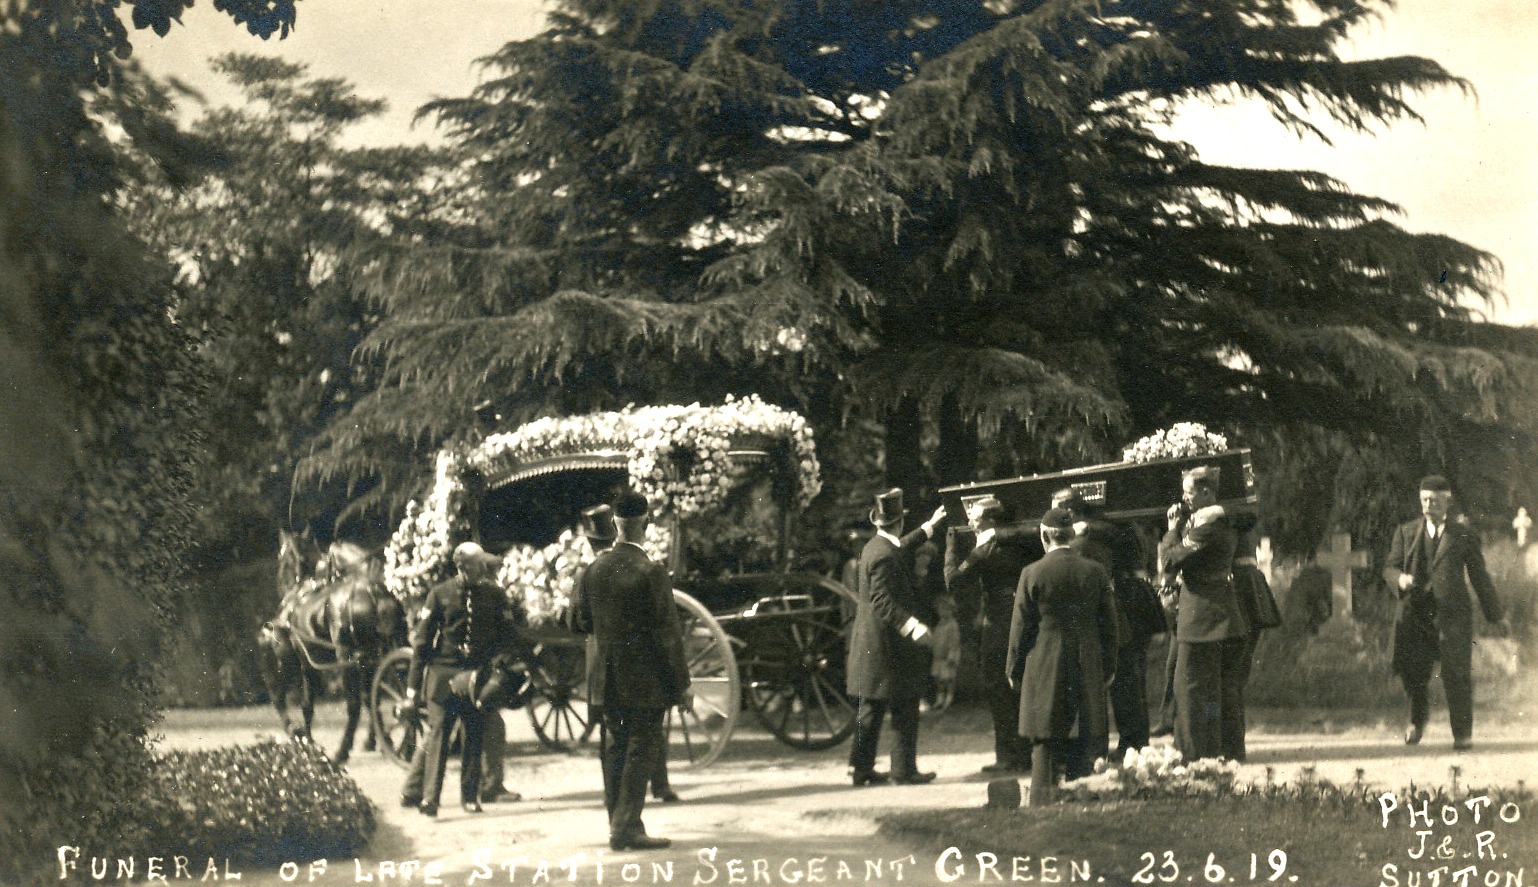 Thomas Green's funeral 